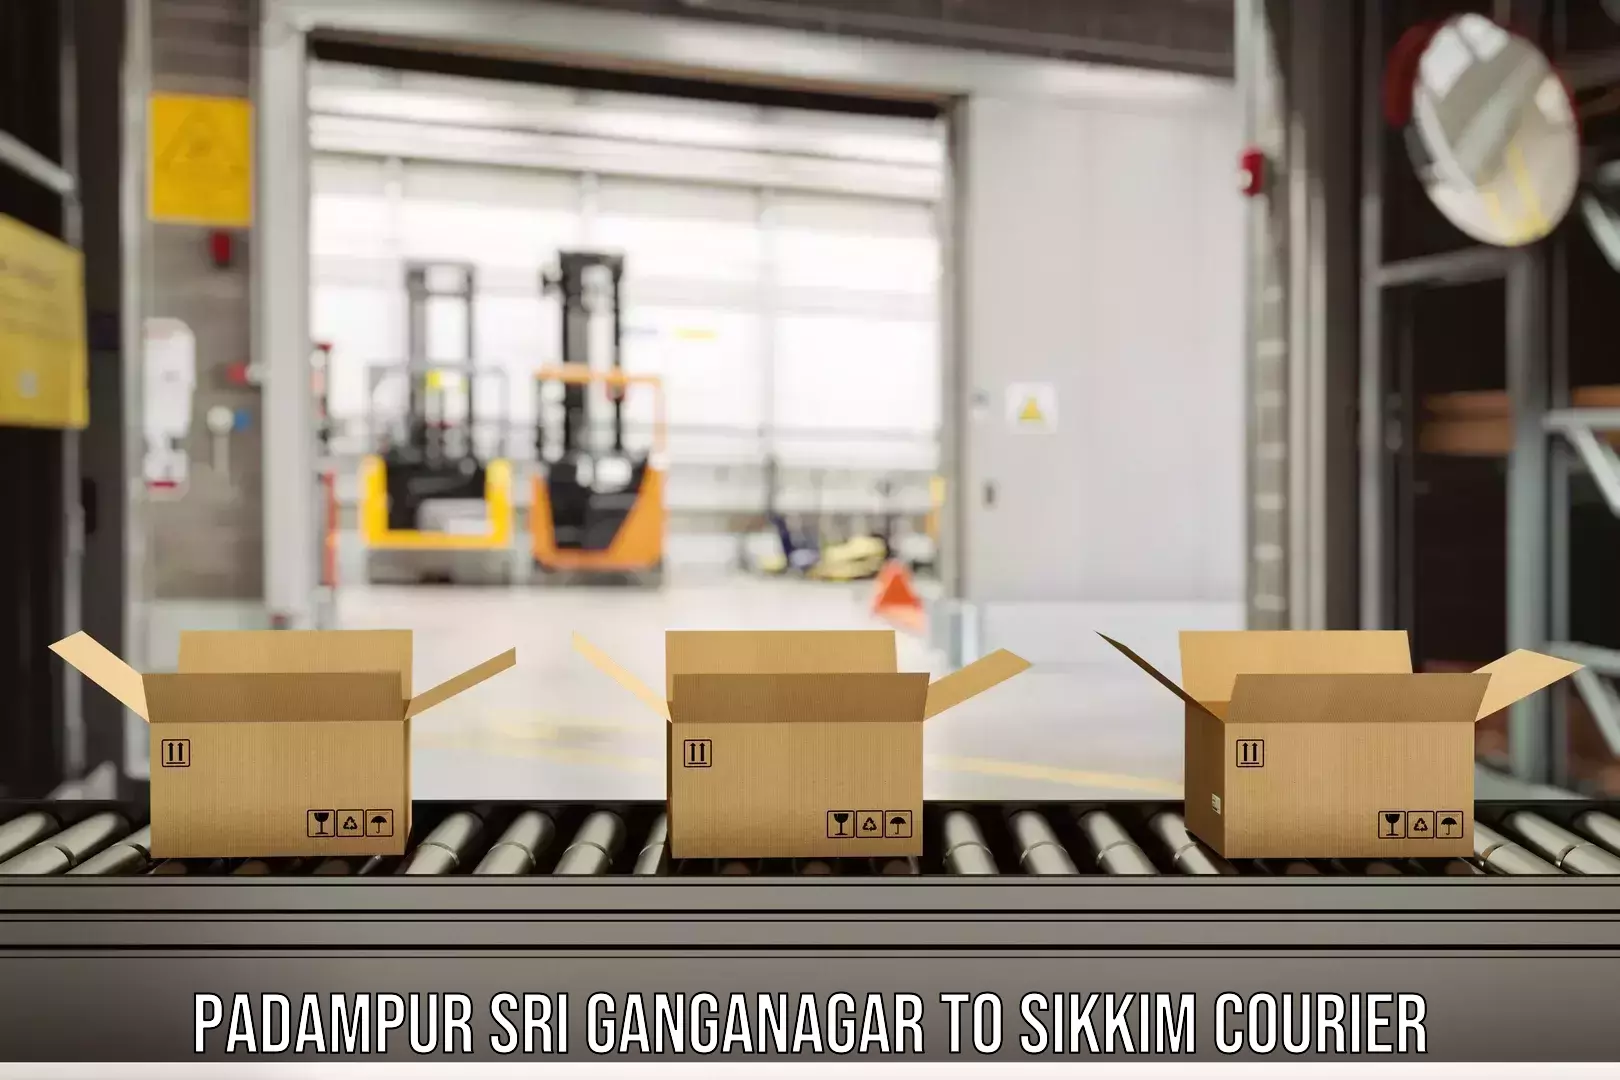 Doorstep delivery service Padampur Sri Ganganagar to Rangpo